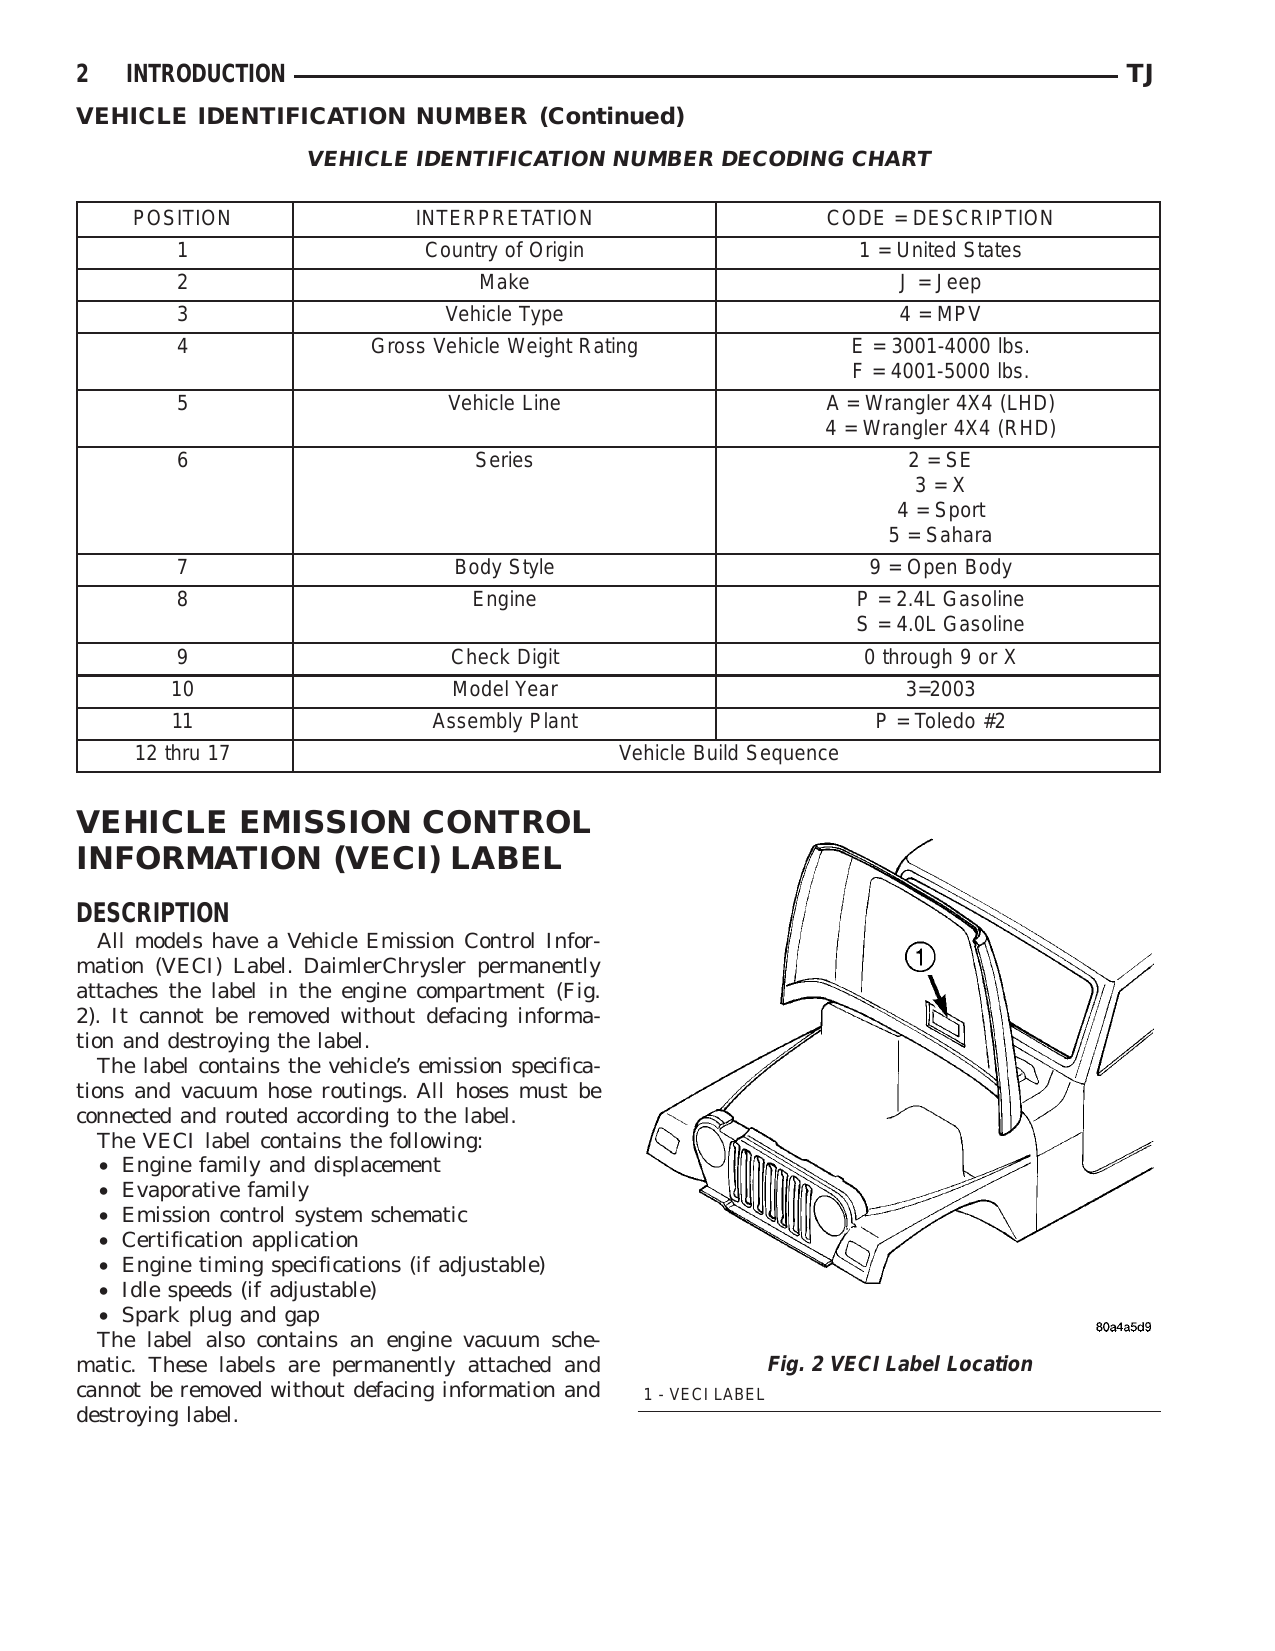 2003 Jeep Wrangler shop manual Preview image 3